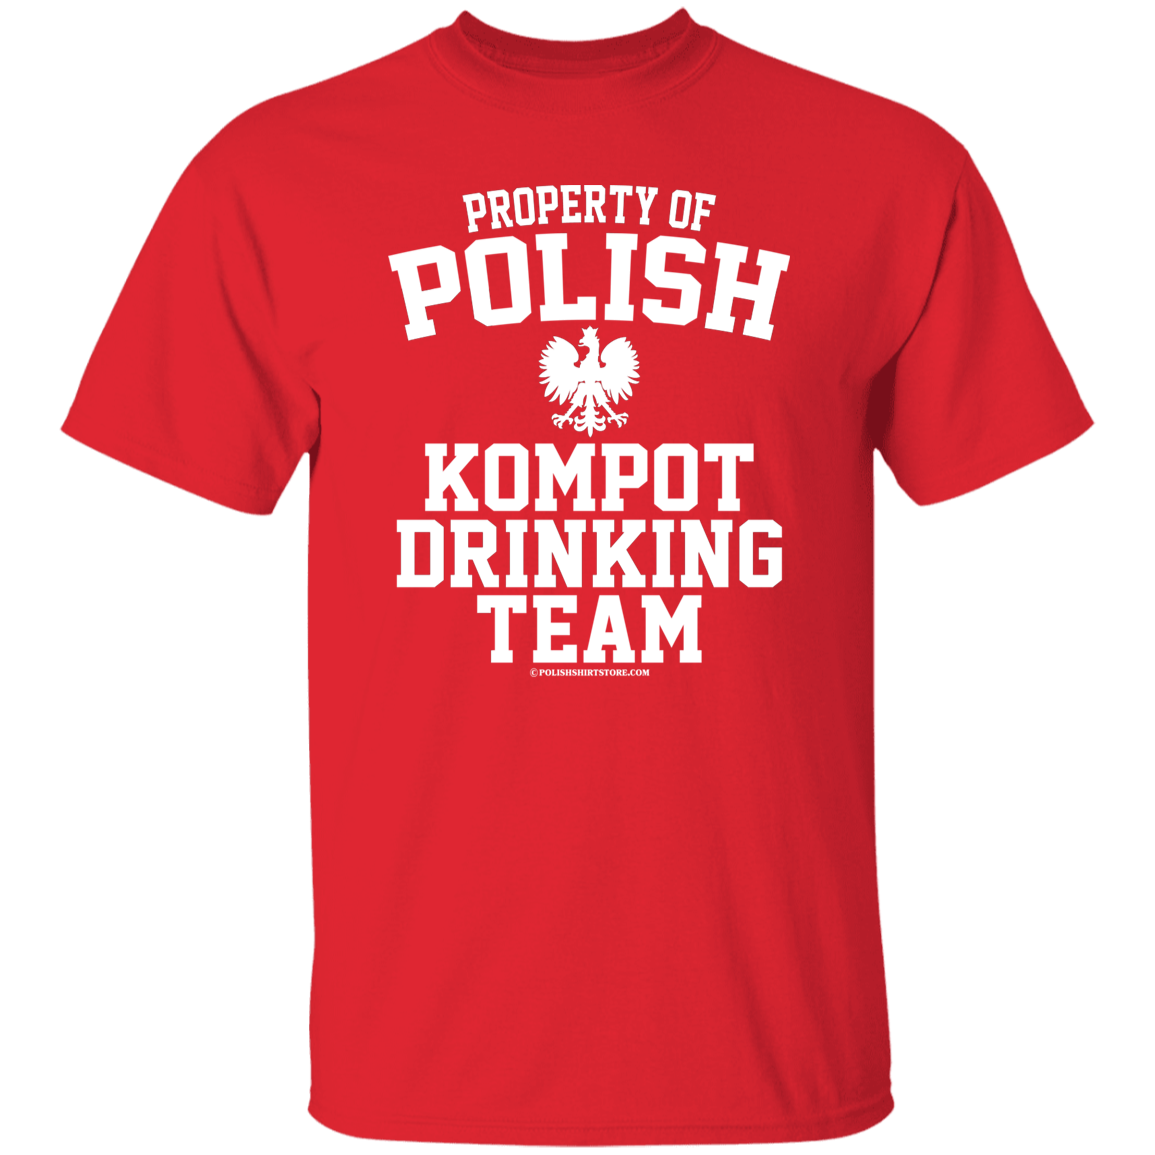 Property of Polish Kompot Drinking Team Apparel CustomCat G500 5.3 oz. T-Shirt Red S